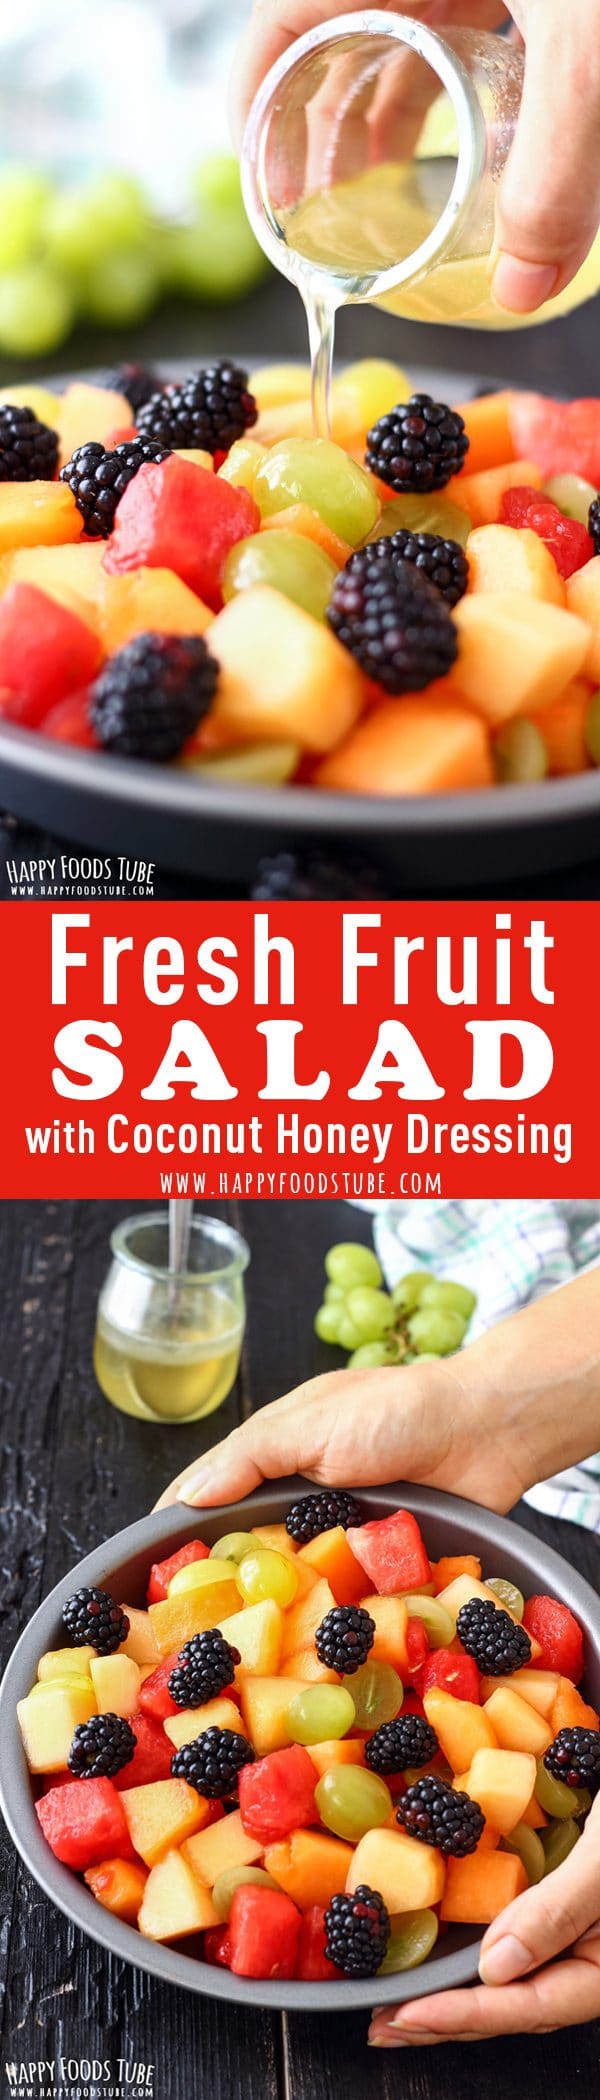 Fresh Fruit Salad with Coconut Honey Dressing Recipe Collage